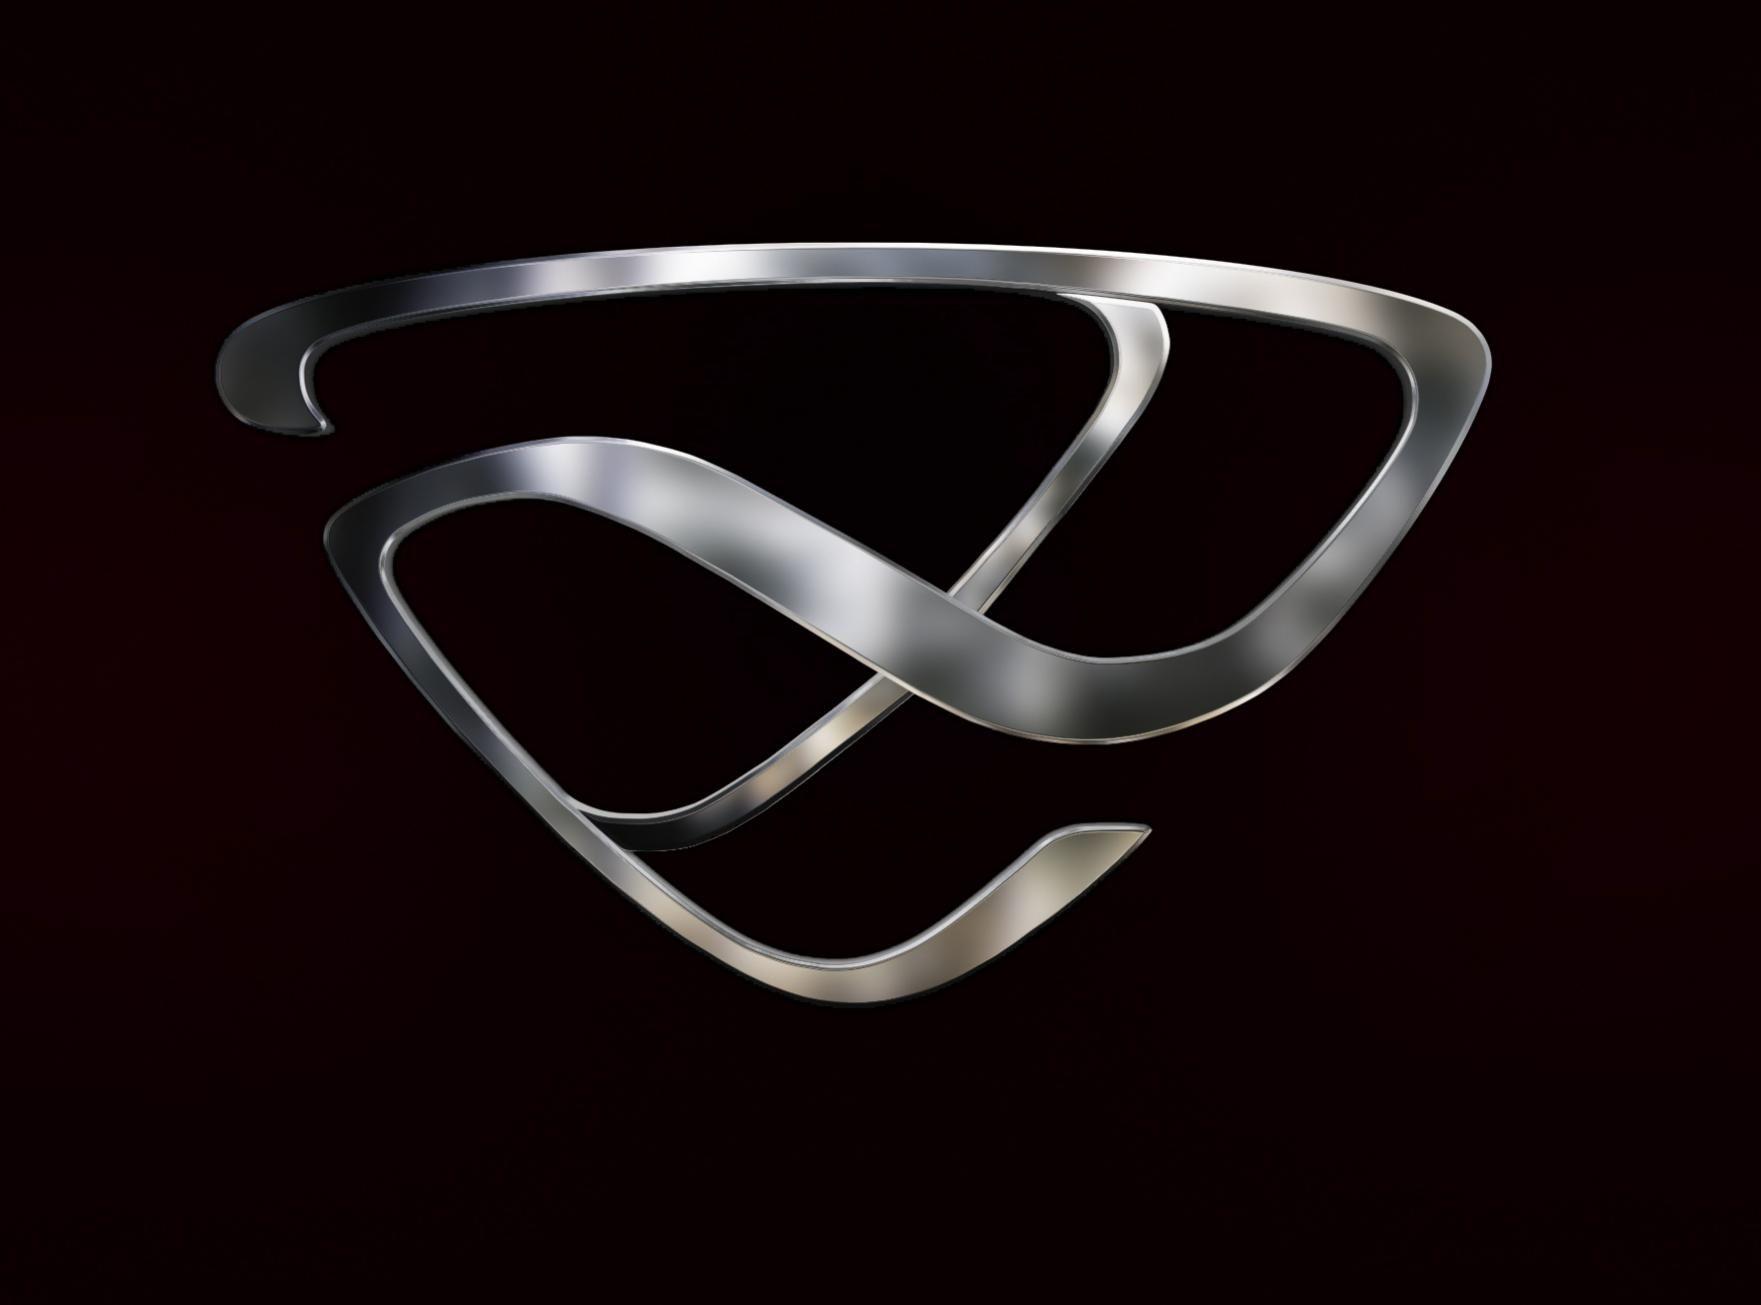 Mazda Rotary Logo - Search: hq foto of efini emblem - RX7Club.com - Mazda RX7 Forum